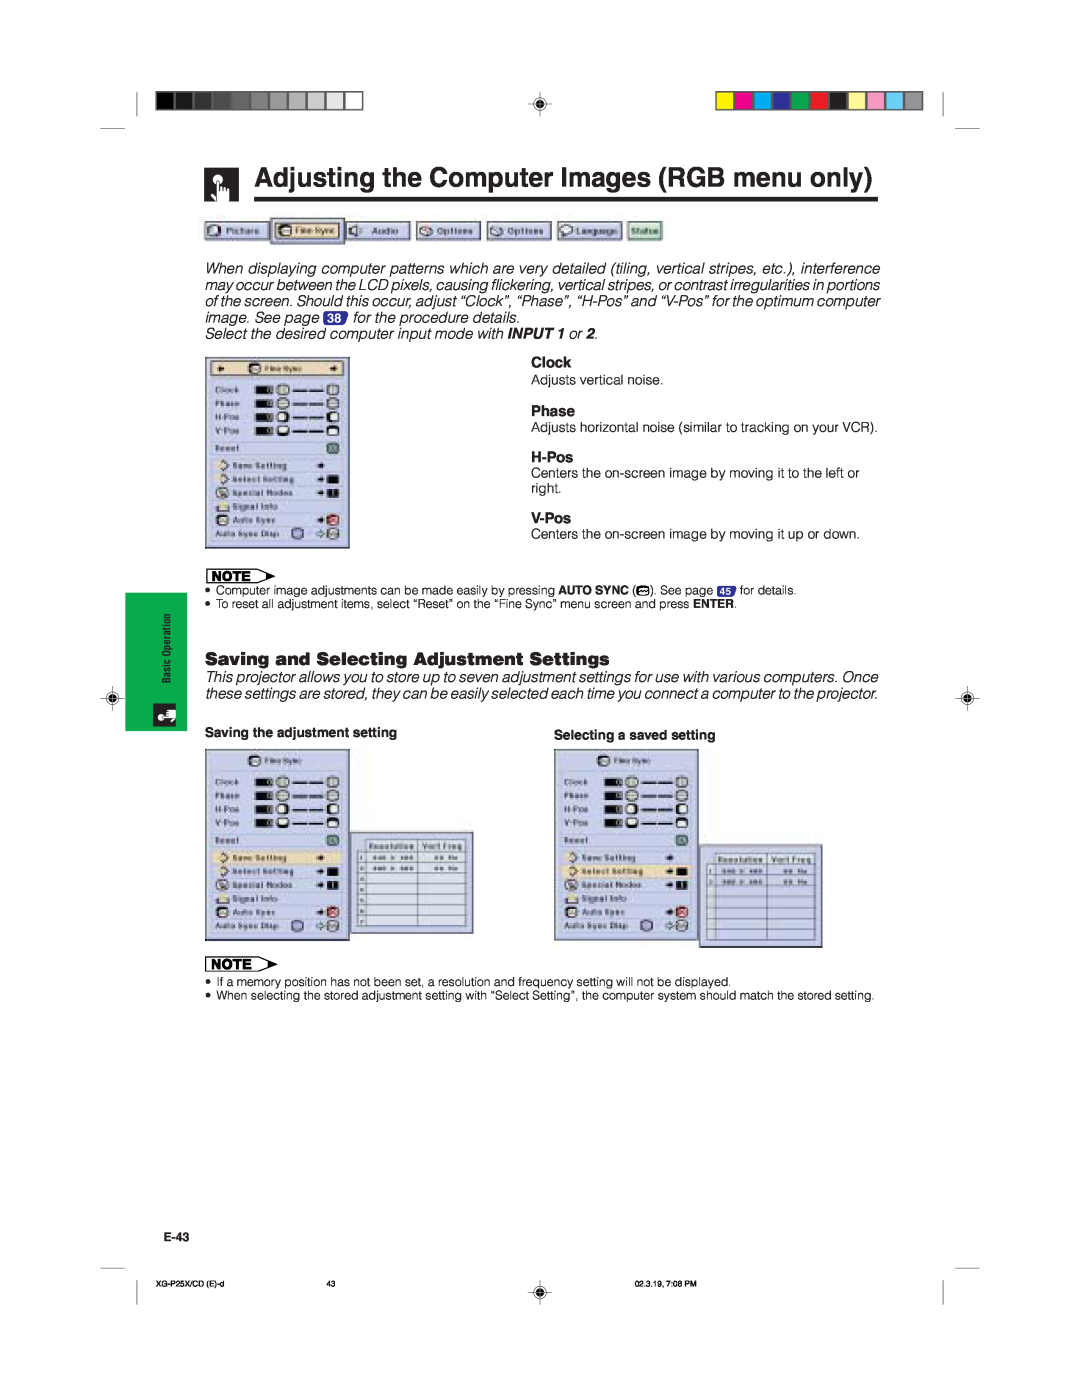 Sharp XG-P25X Adjusting the Computer Images RGB menu only, Saving and Selecting Adjustment Settings, Clock, Phase, H-Pos 